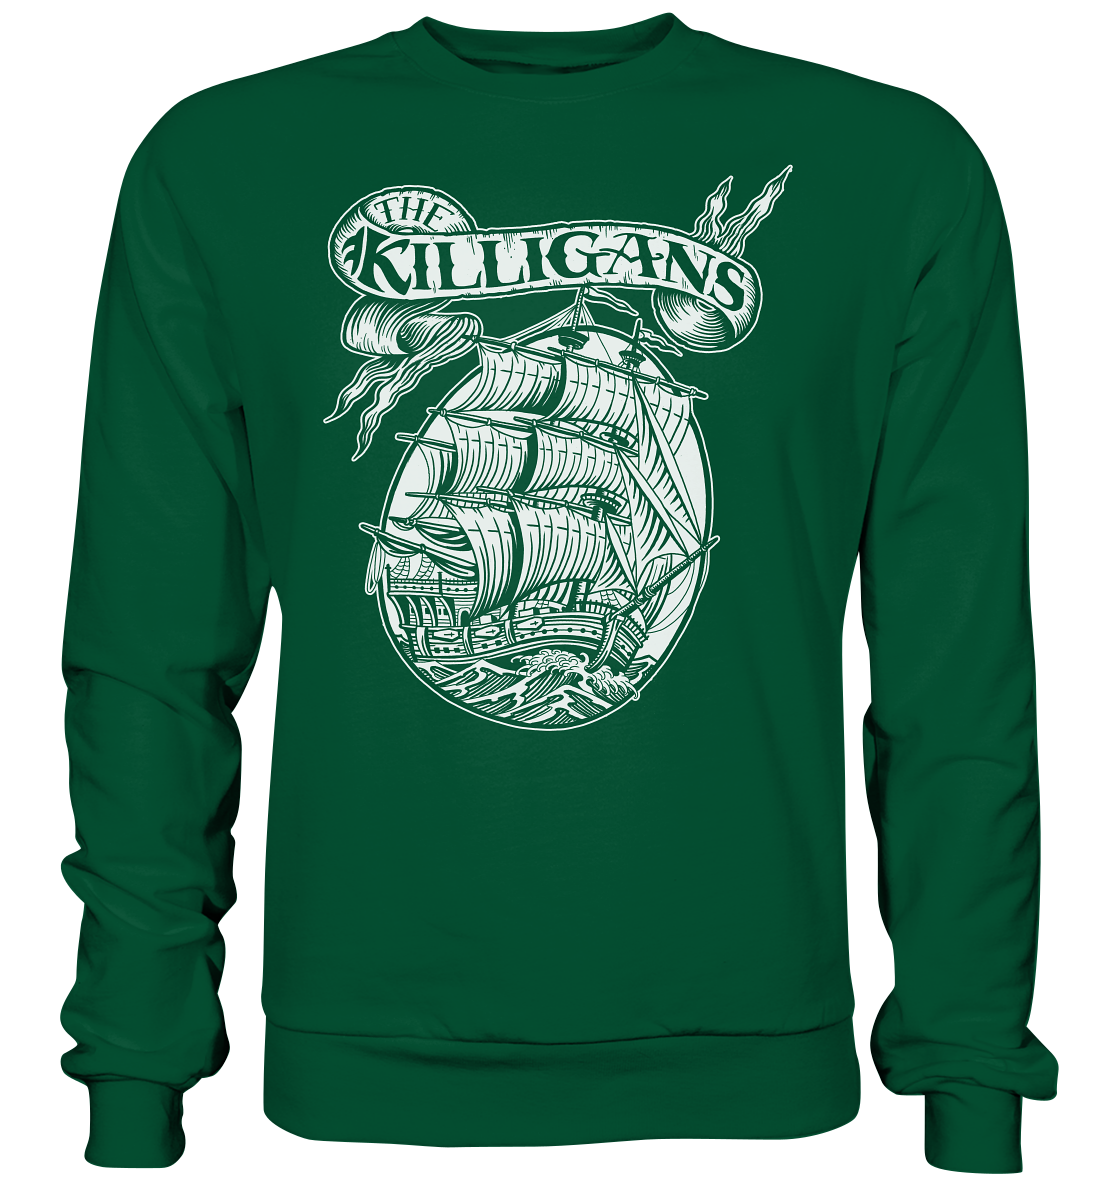 The Killigans "Ship" - Basic Sweatshirt